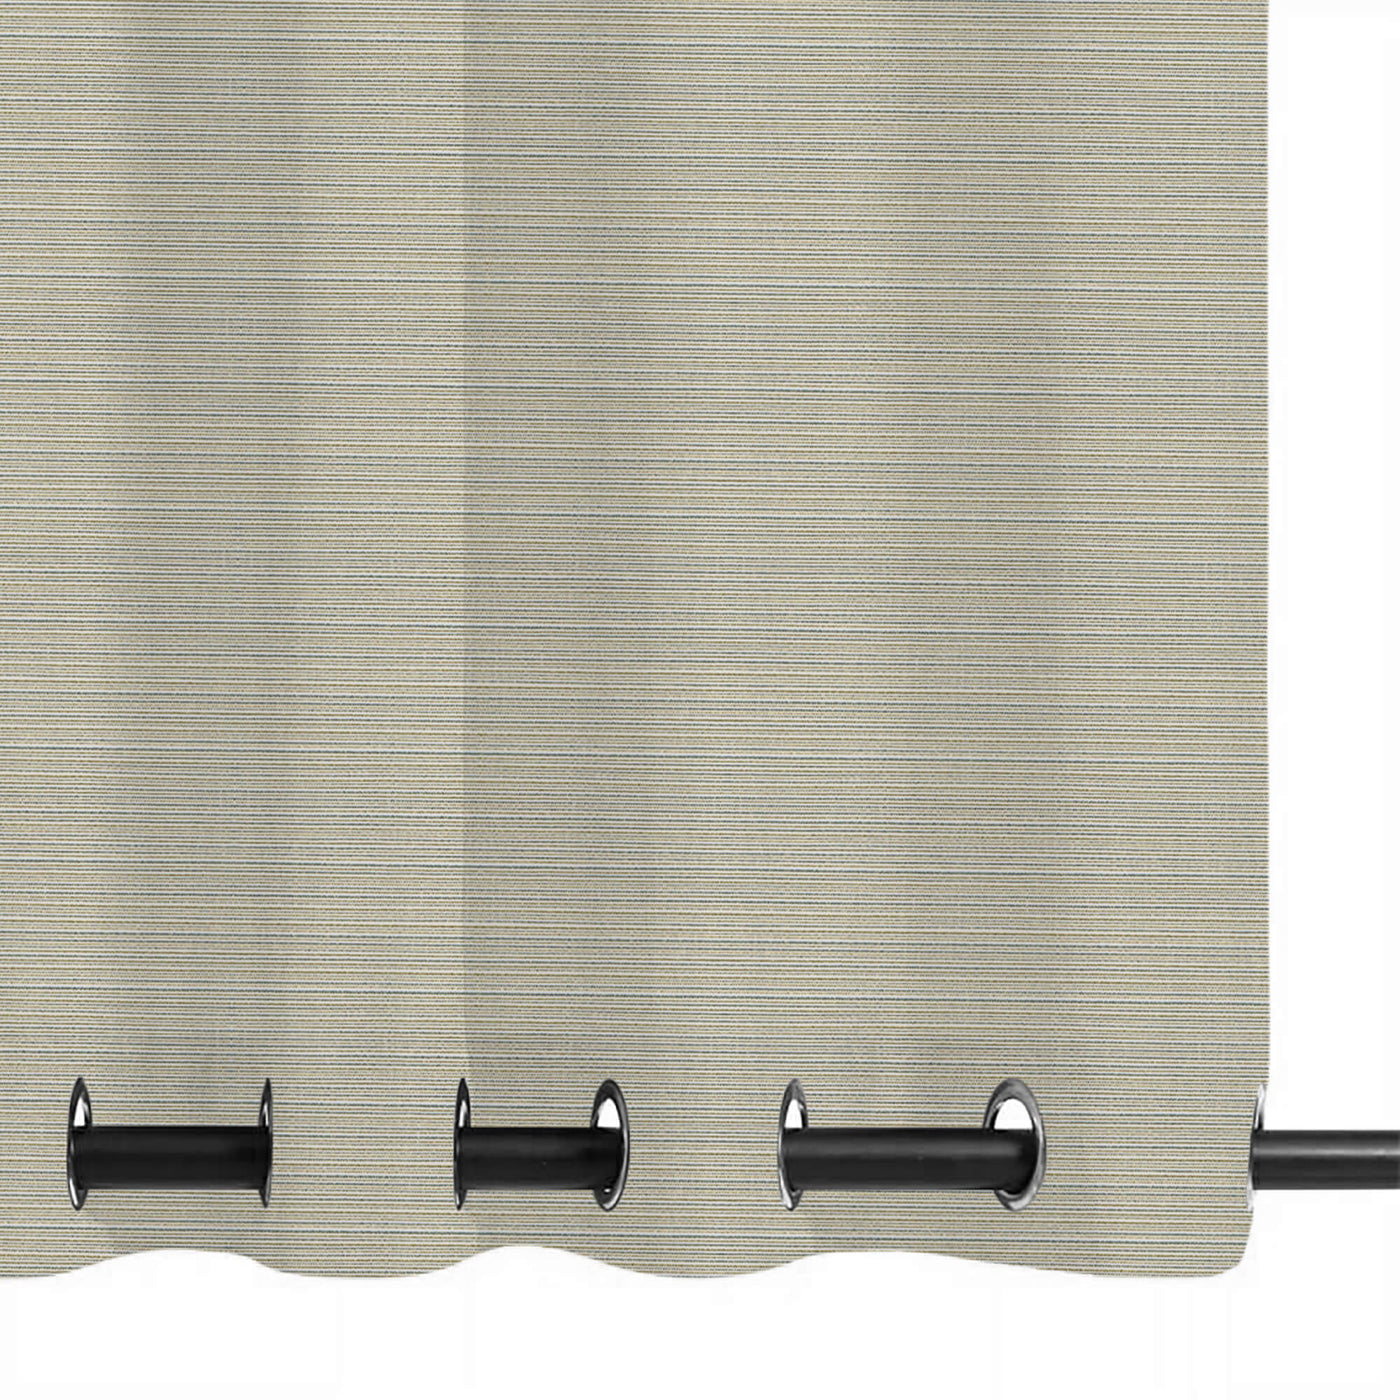 PENGI Outdoor Curtains Waterproof- Bamboo London Fog